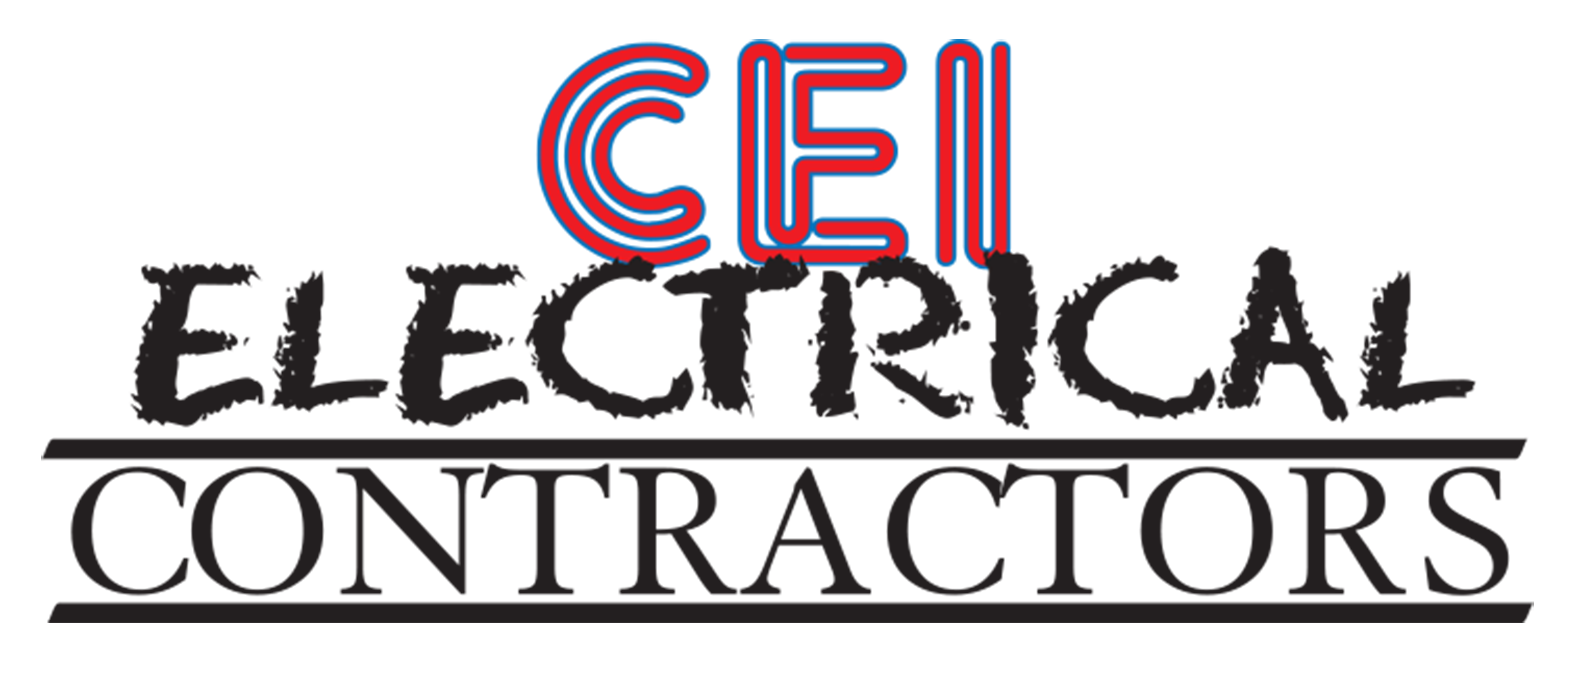 CEI Electrical Contractors